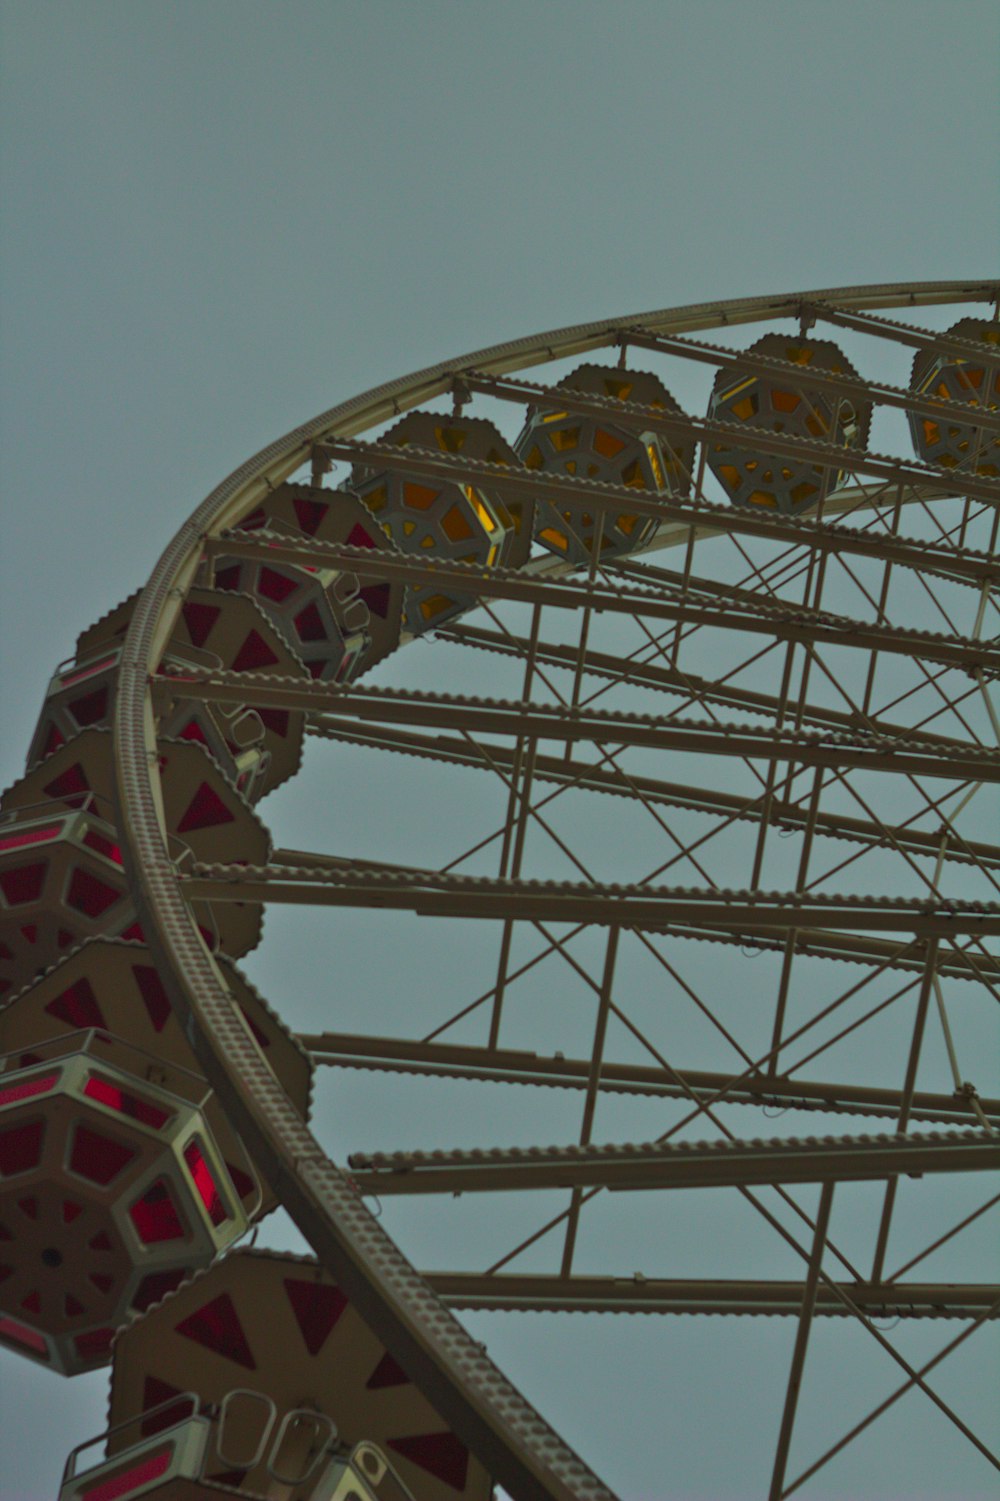 white, red, and yellow Ferris wheel